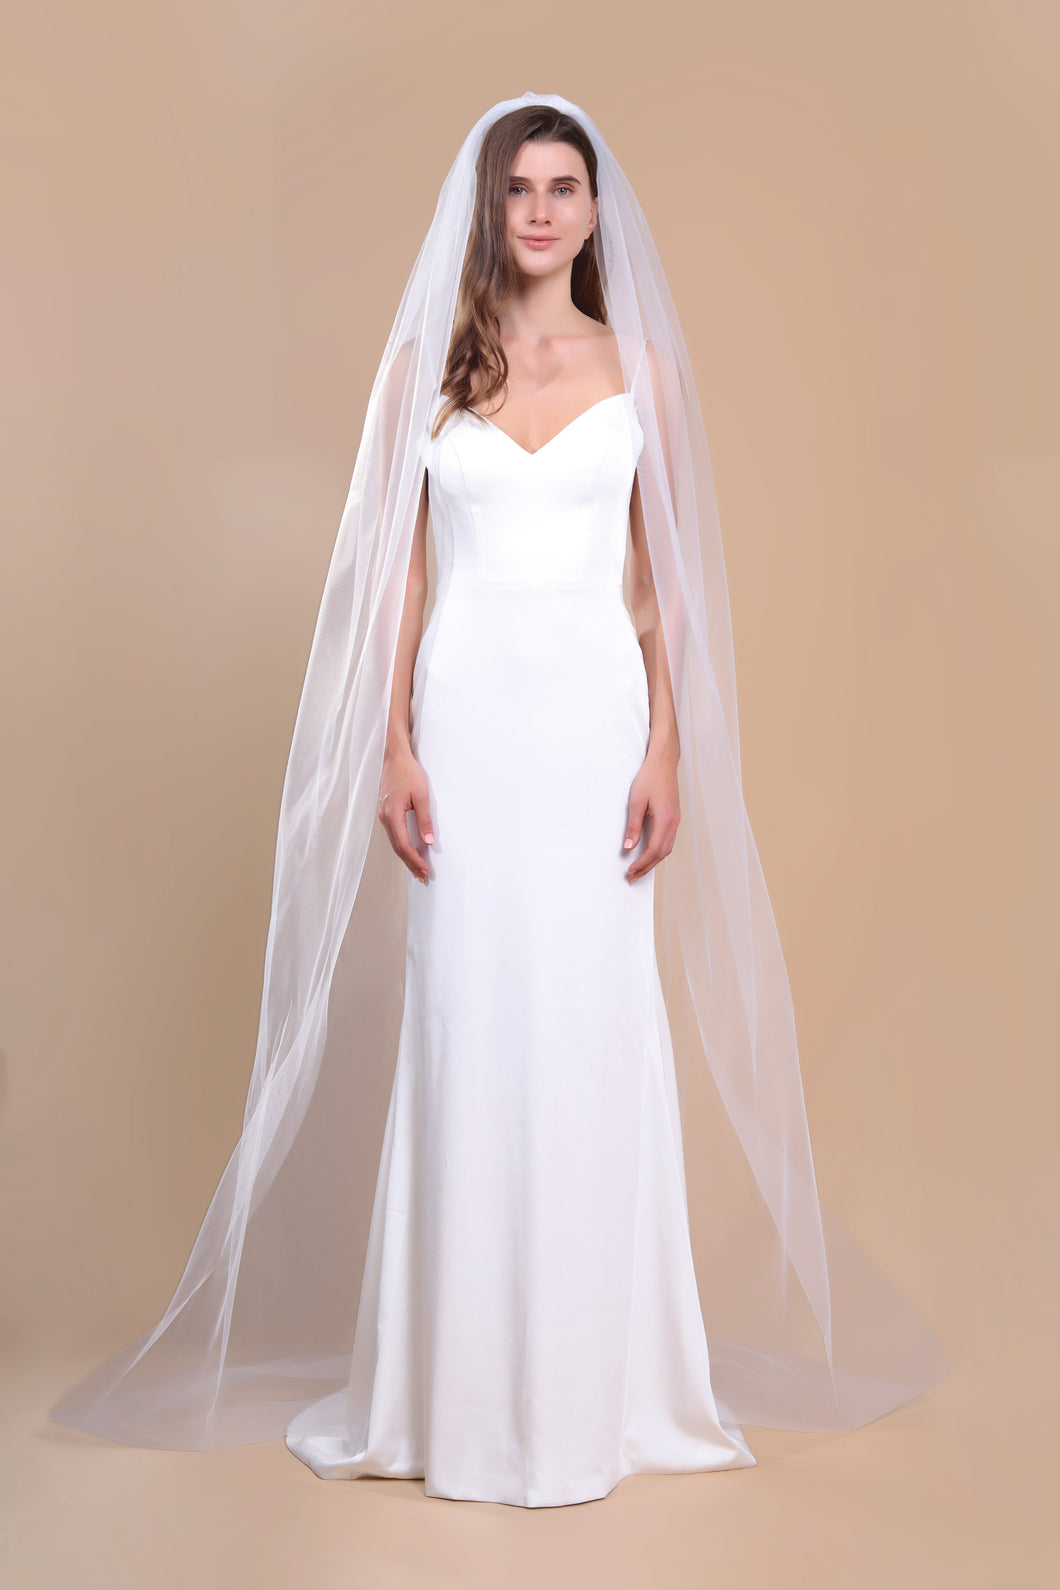 Juliet Cap One Layer Wedding Veil Cathedral Length Cut Edge Floor